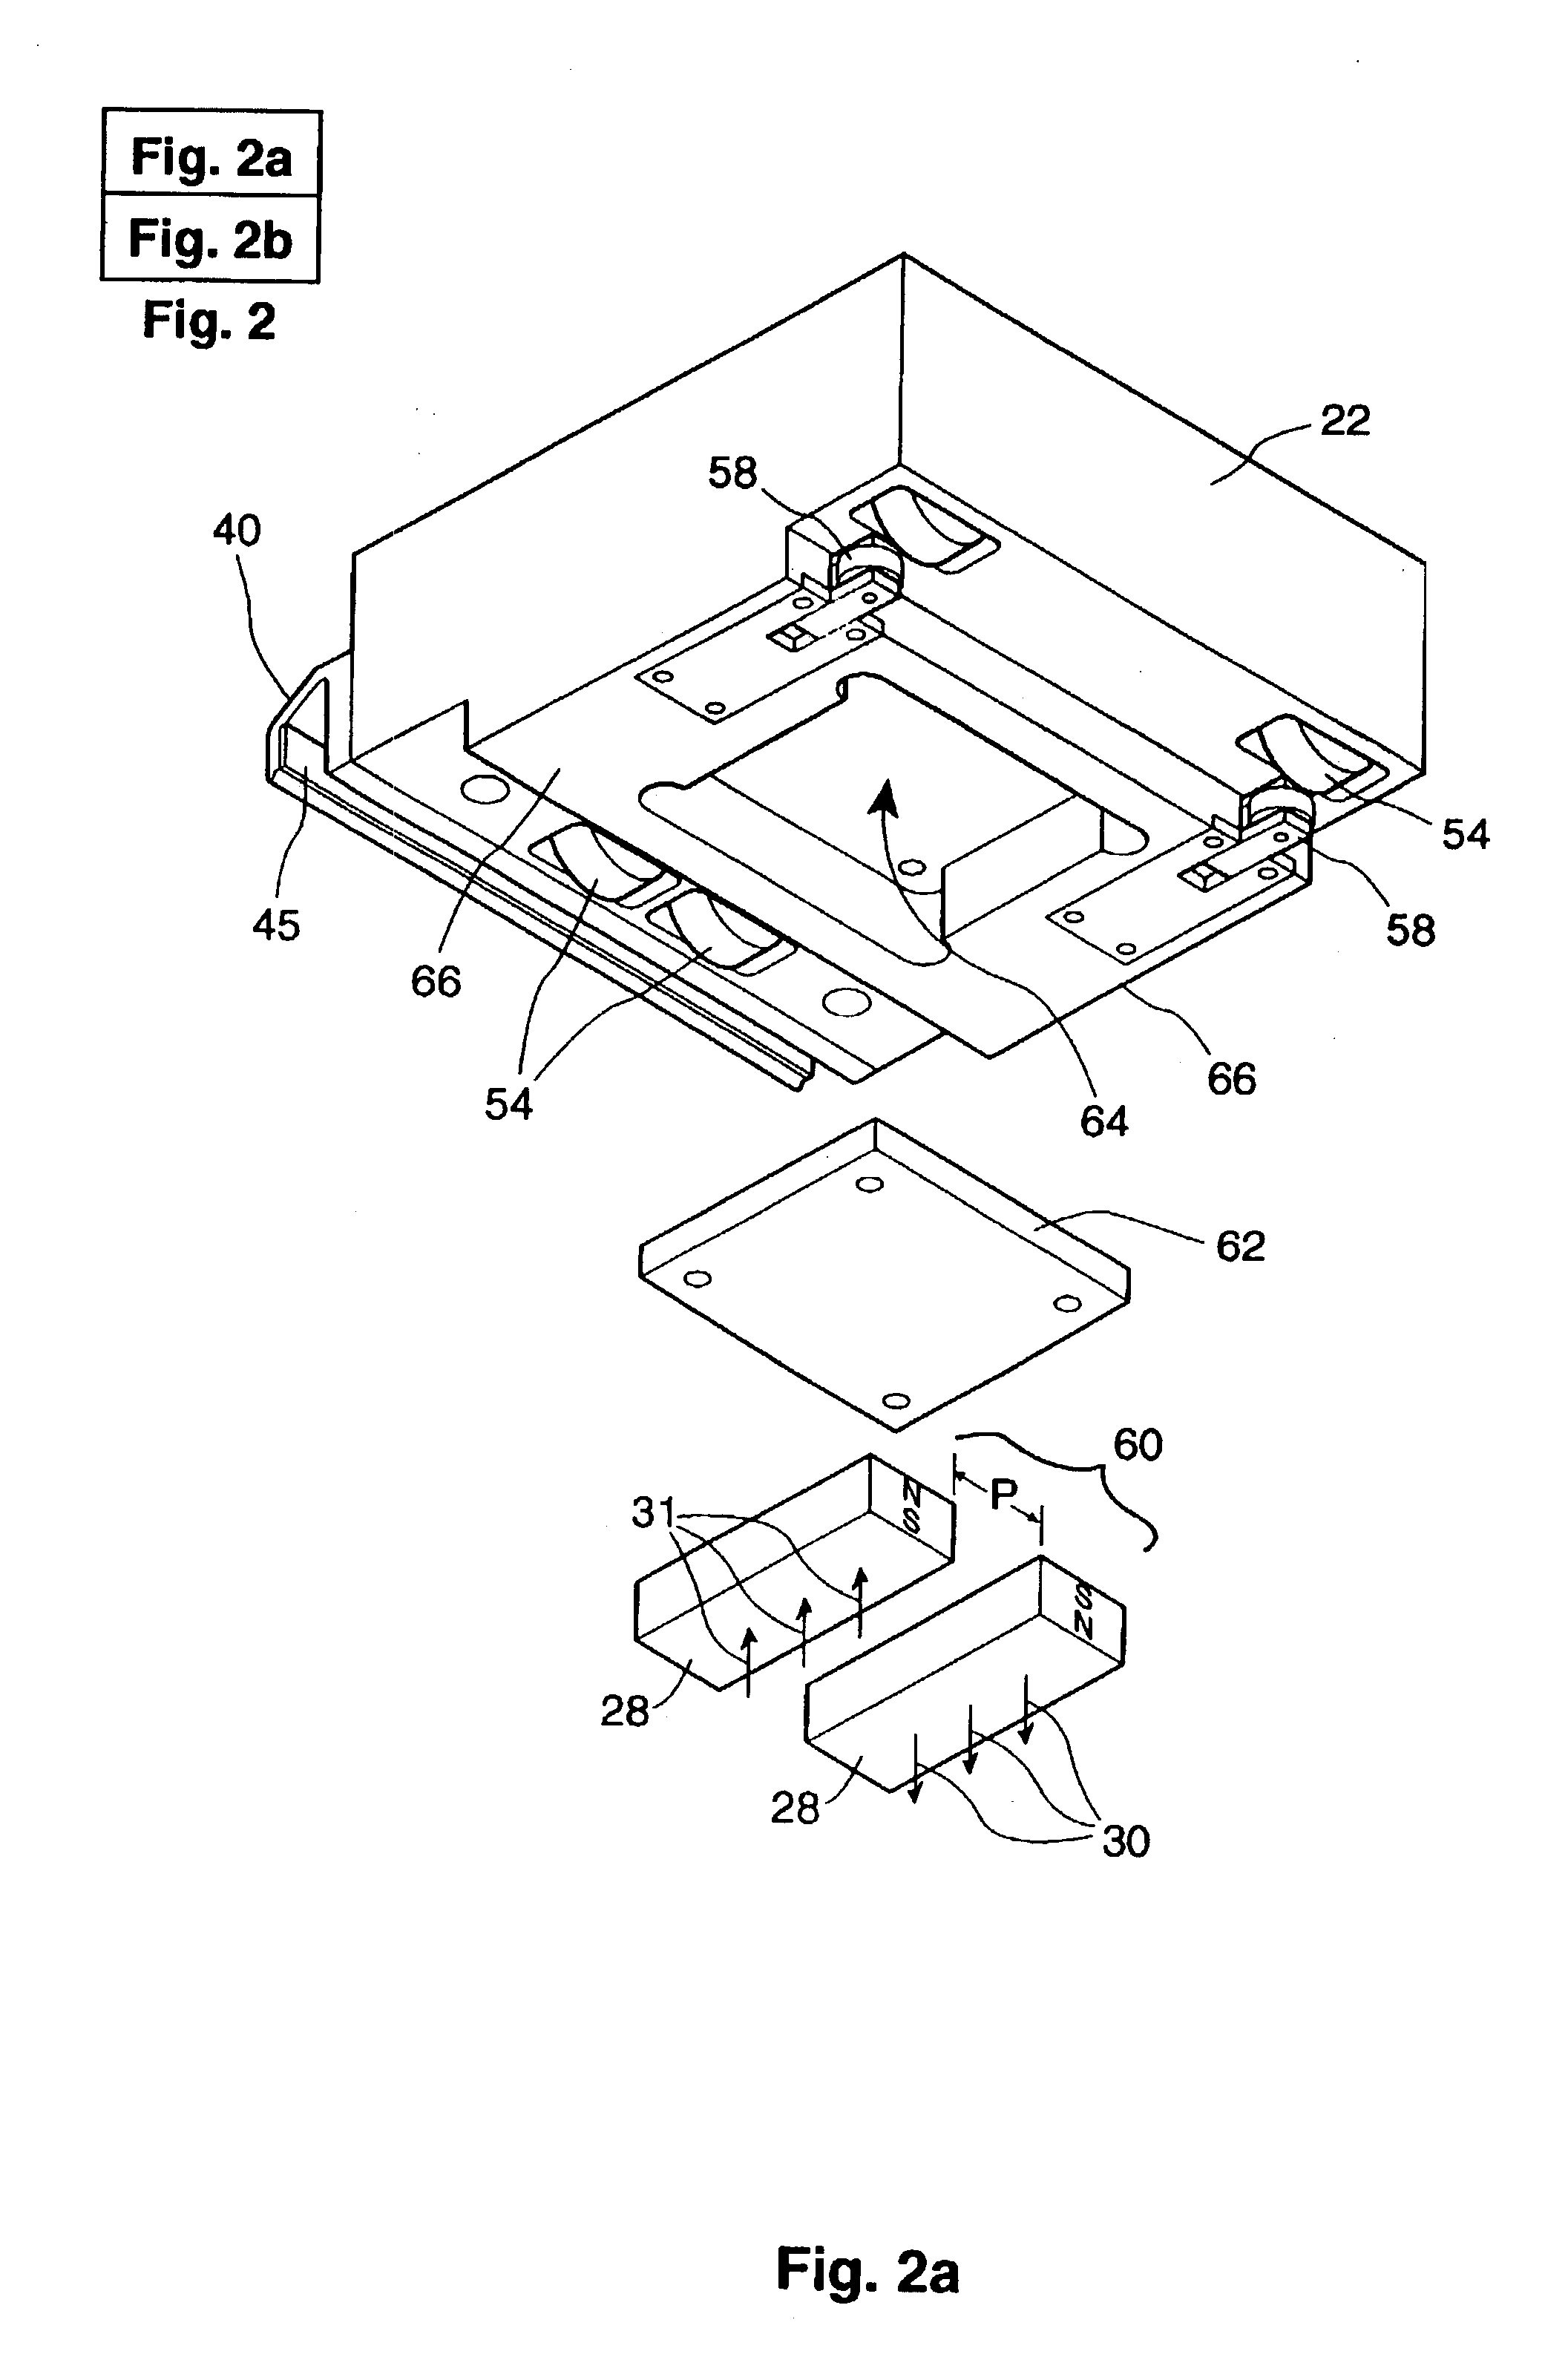 Modular conveyor system having multiple moving elements under independent control